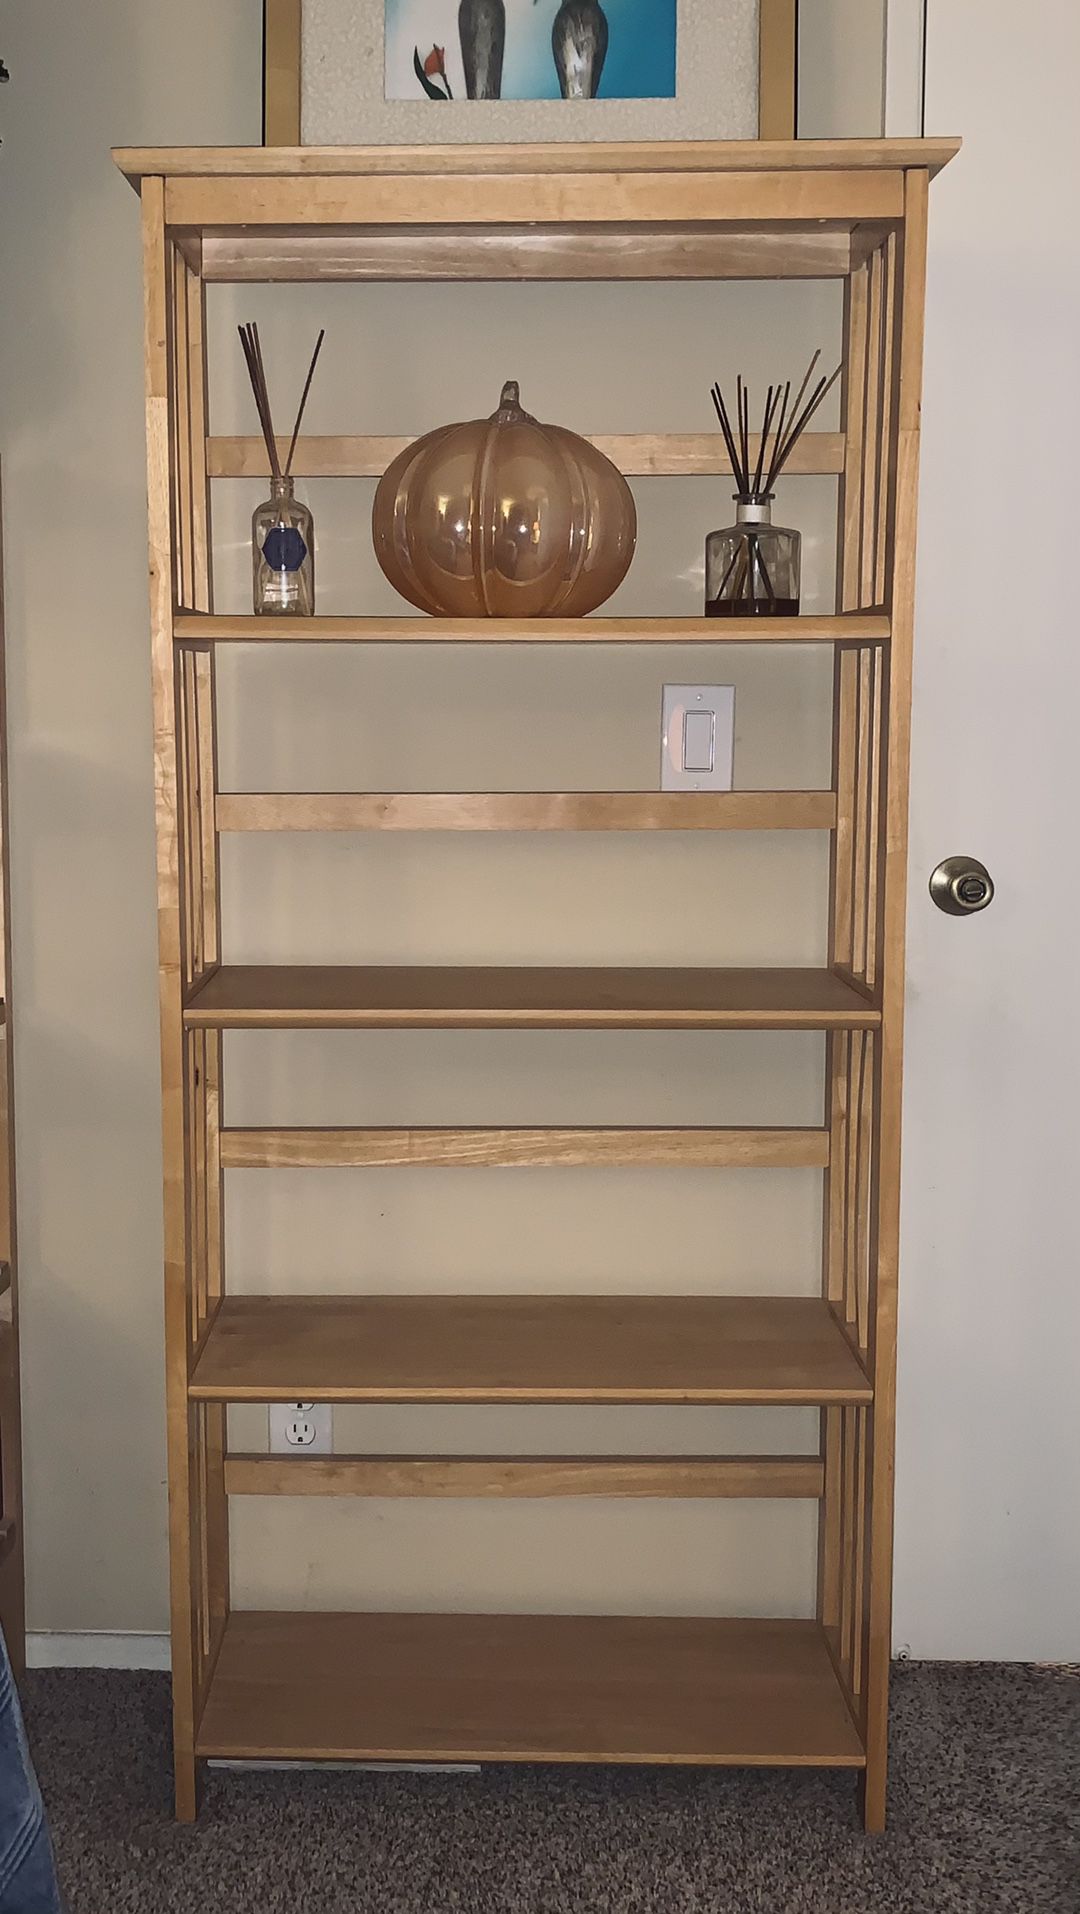 Beautiful Bamboo Wood Bookshelf/ Display Shelf!